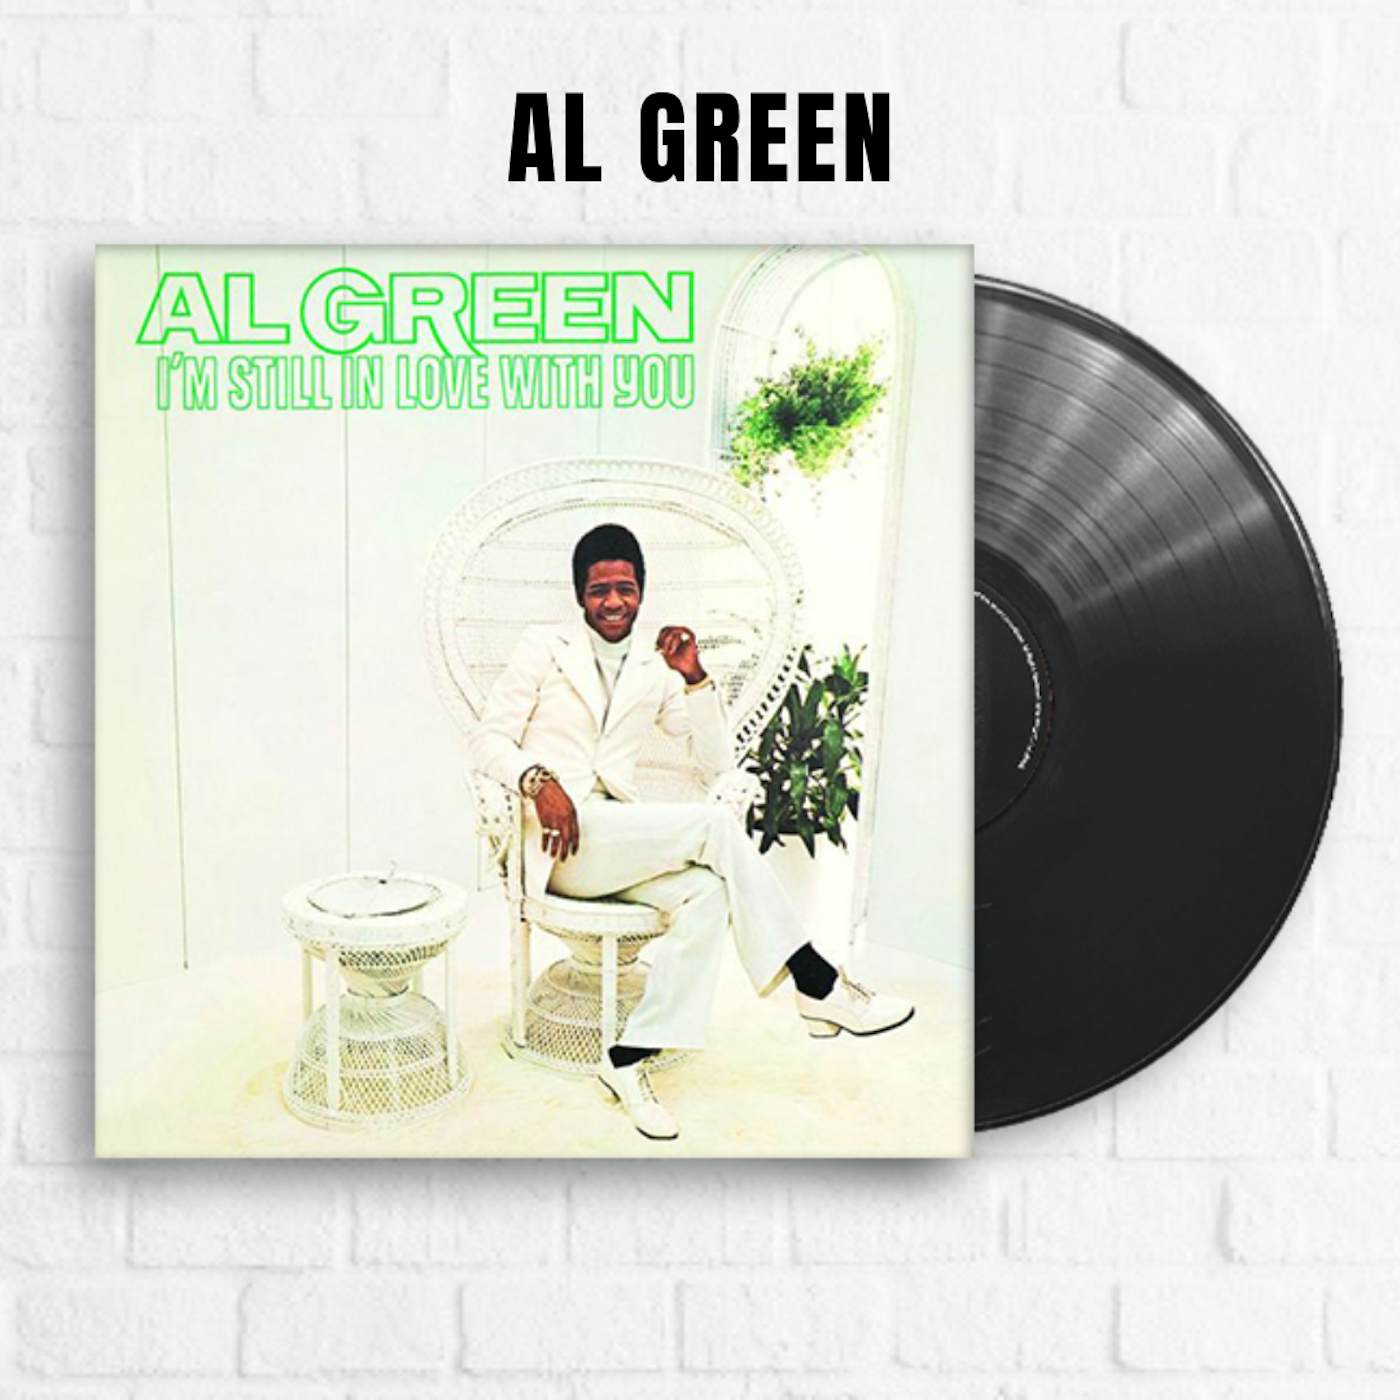 Al Green - Greatest Hits Vinyl Record